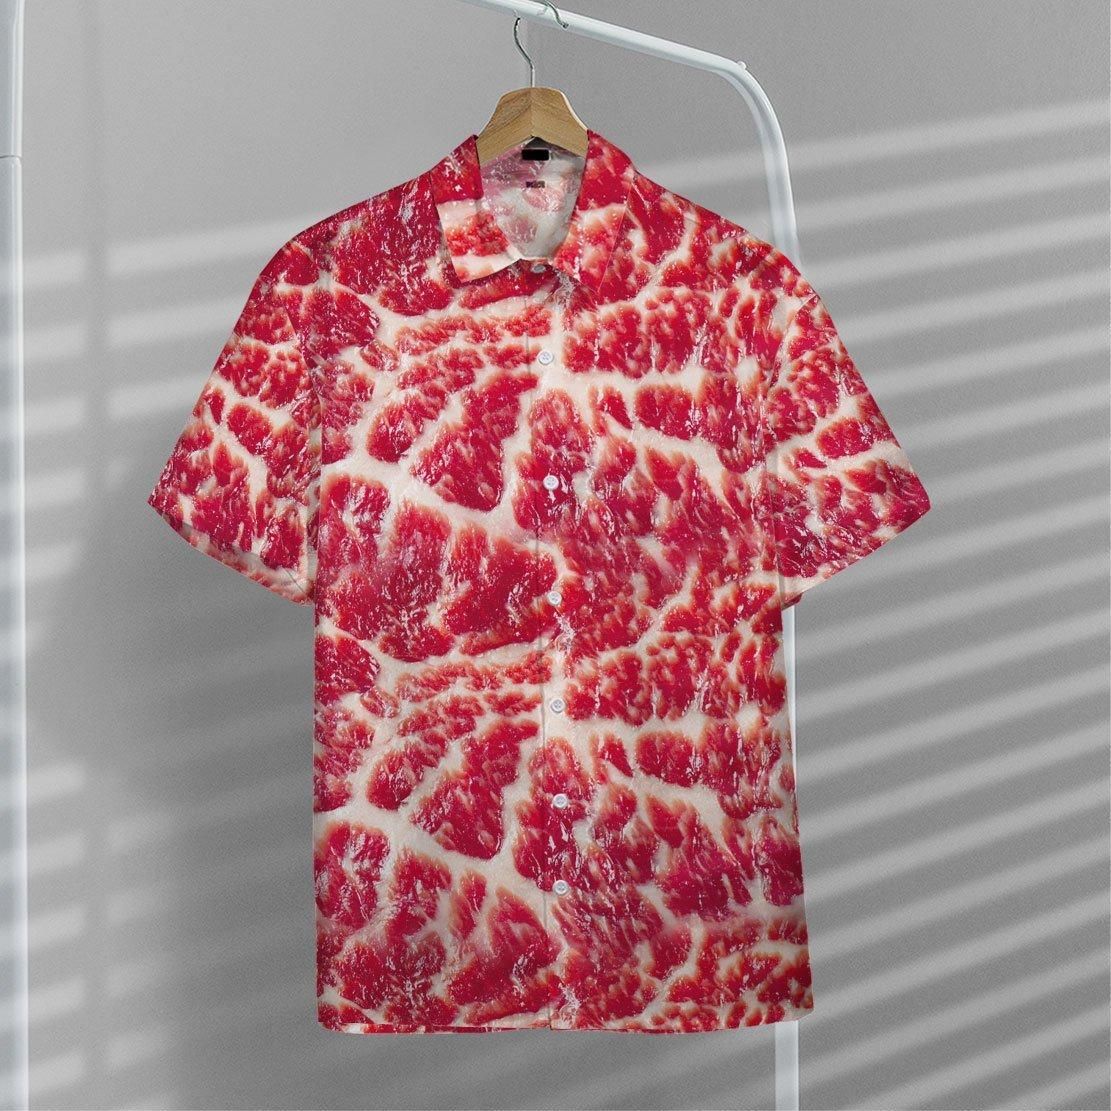 3D Raw Meat Aloha Hawaiian Shirt Colorful Short Sleeve Summer Beach Casual Shirt For Men And Women